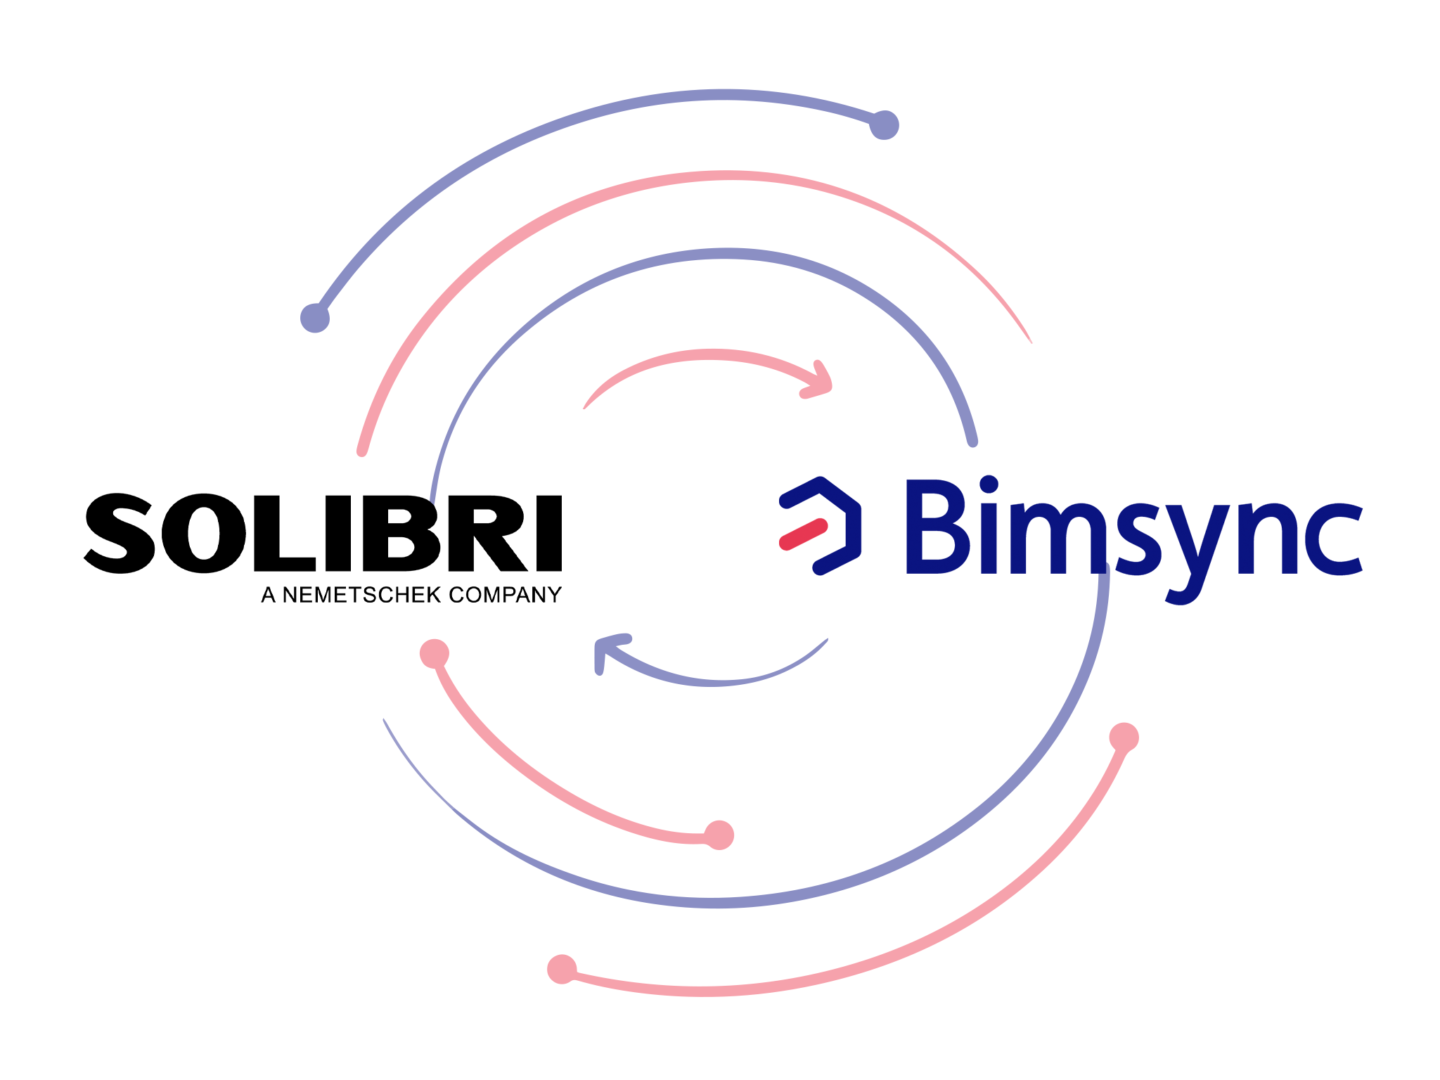 Bimsync logo (now CatendaHub) in combination with Solibri